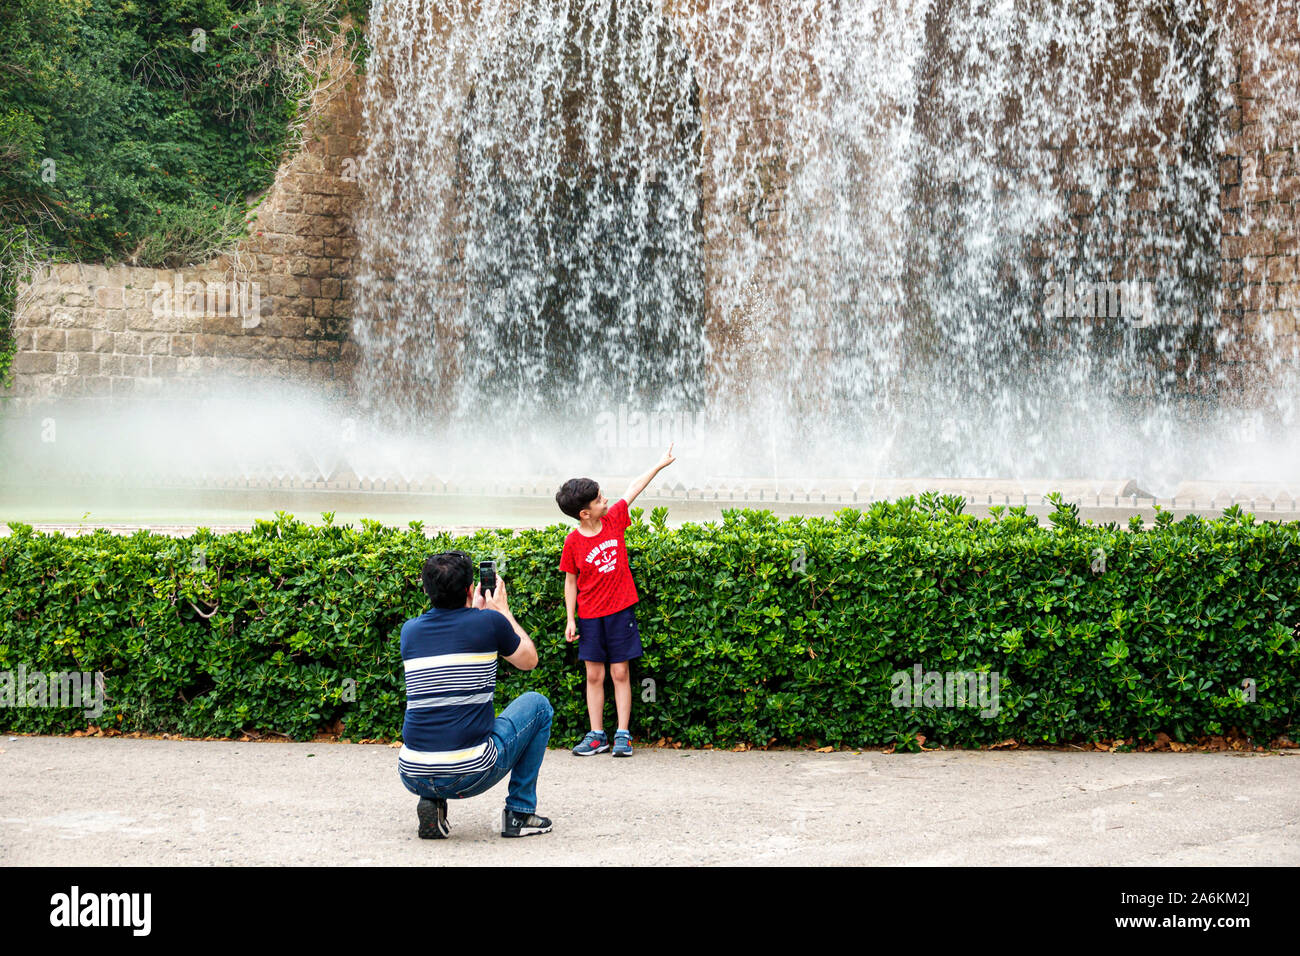 Barcelona Spain,Catalonia Parc de Montjuic,fountain,man,boy,pointing,father,son,family,taking photo,Hispanic,ES190821168 Stock Photo